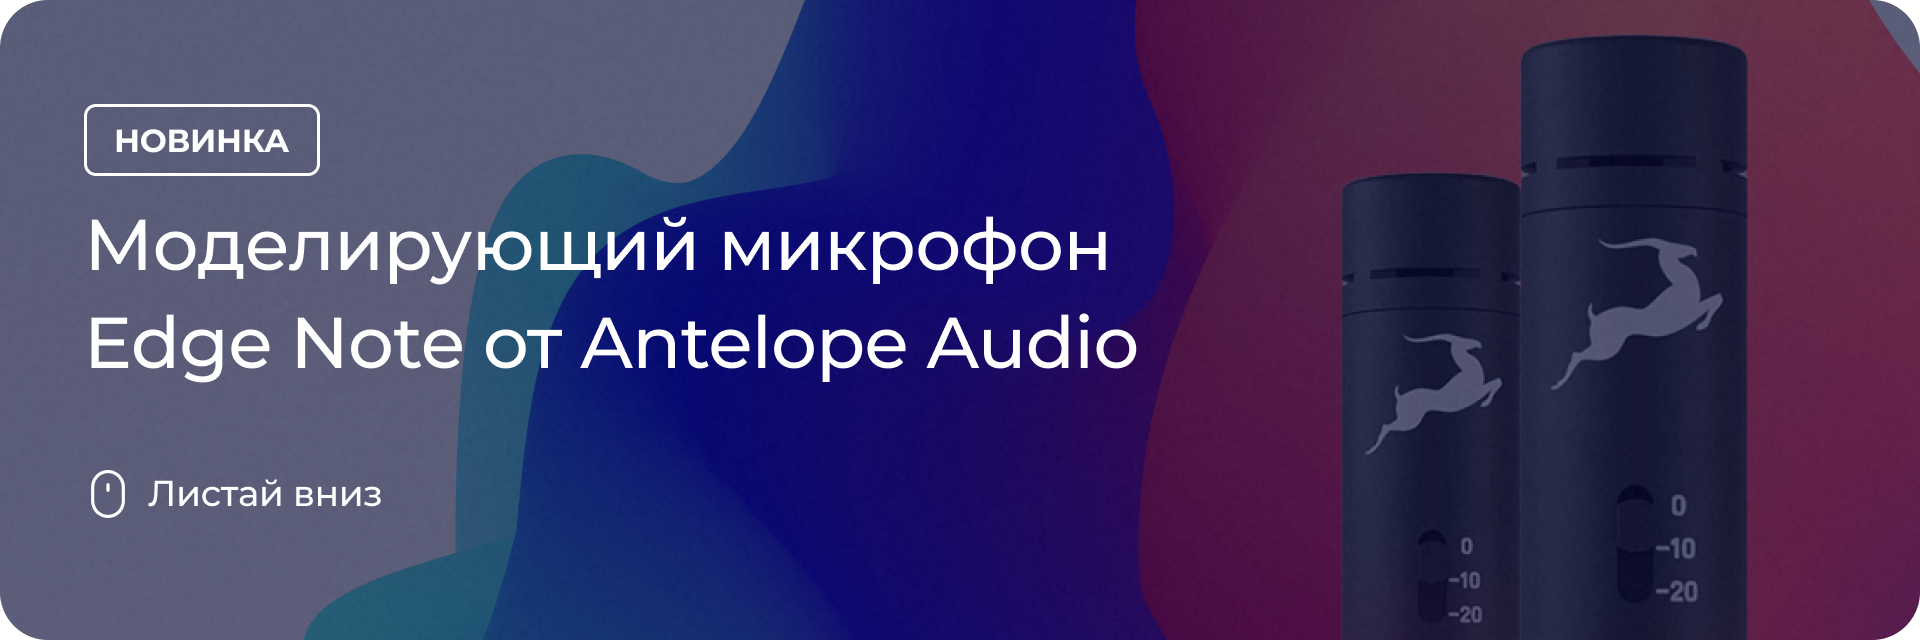 Моделирующий микрофон Edge Note от Antelope Audio